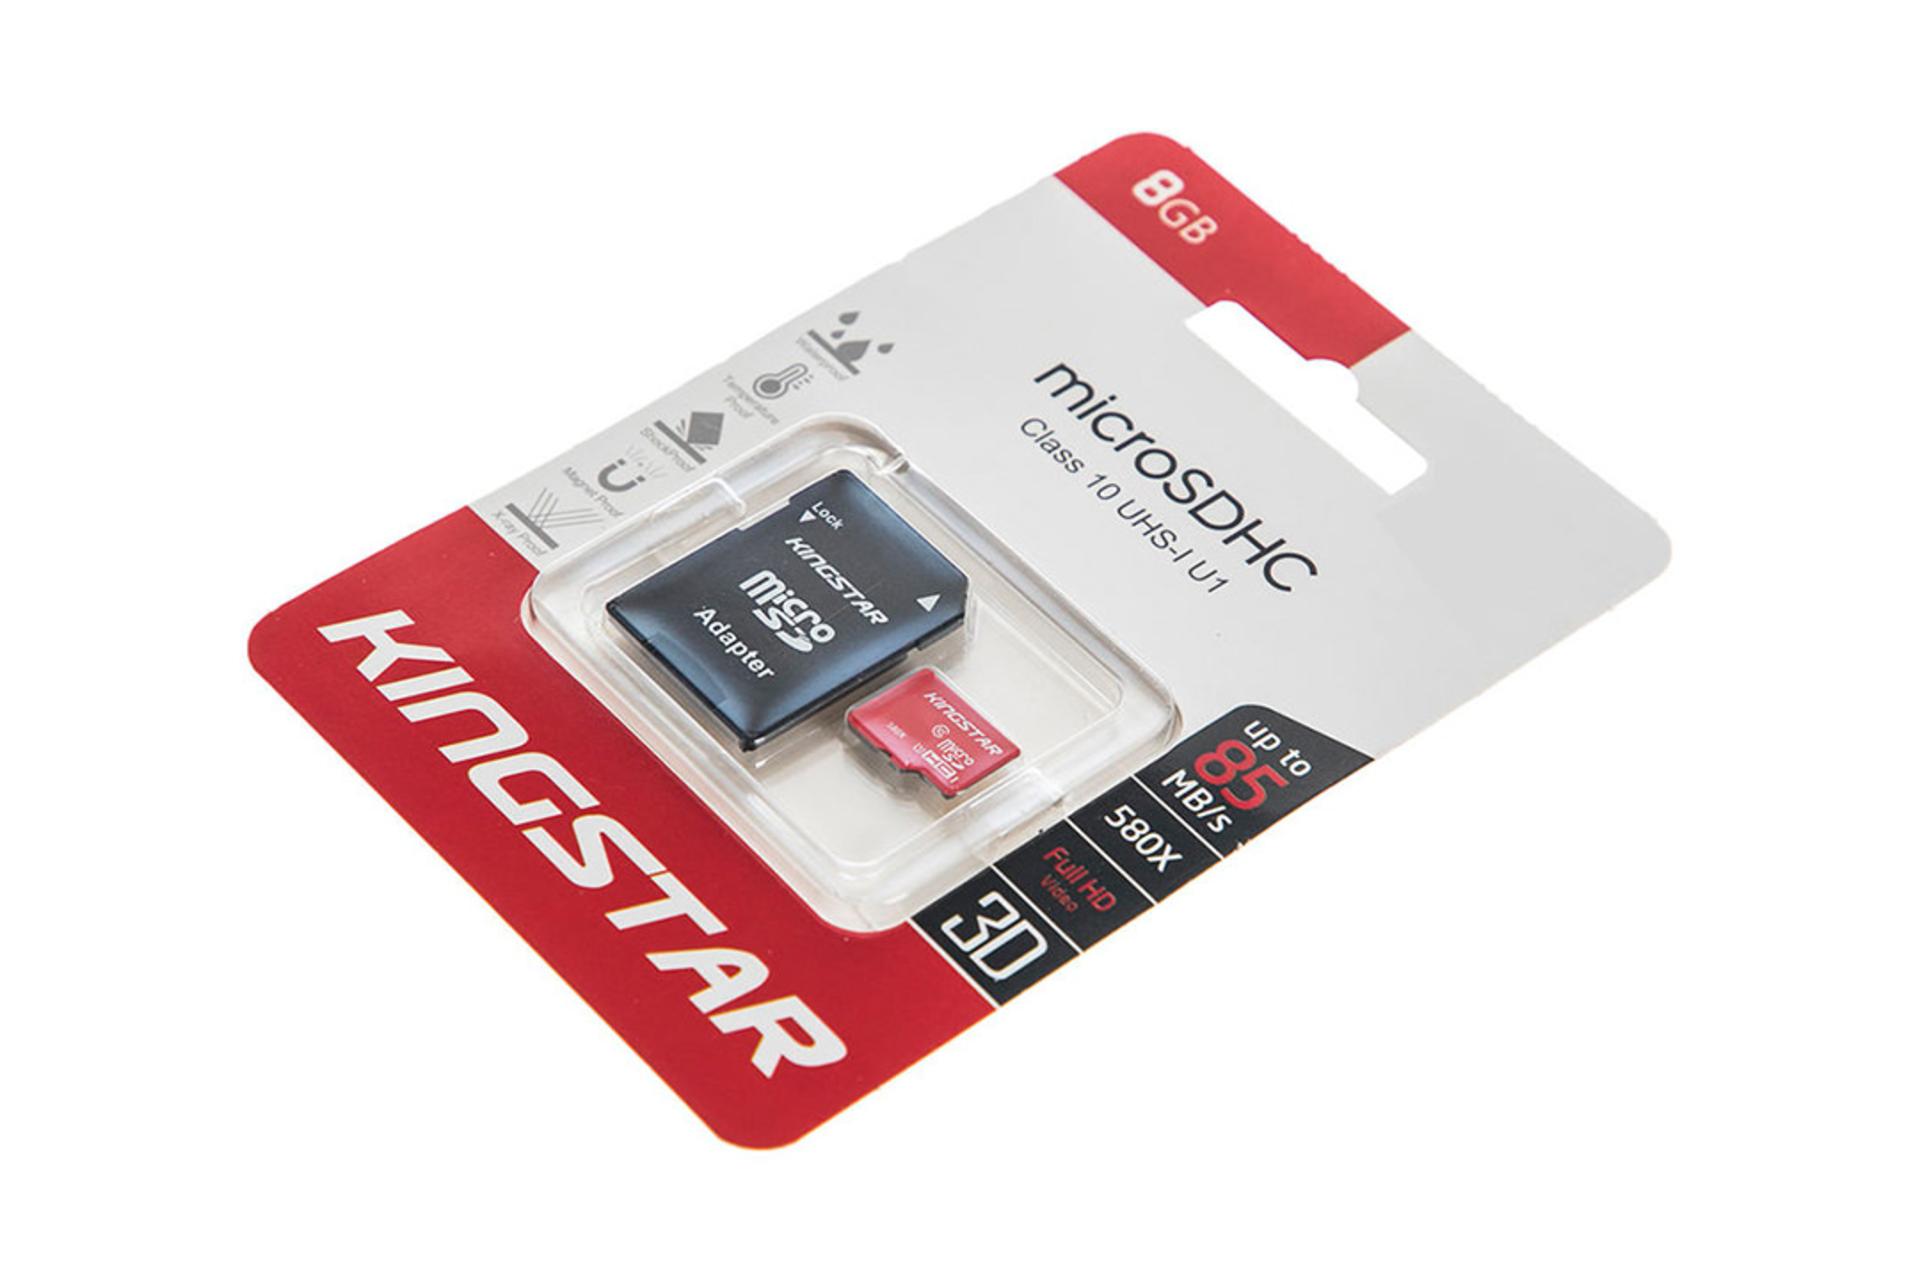 Kingstar microSDHC Class 10 UHS-I U1 16GB